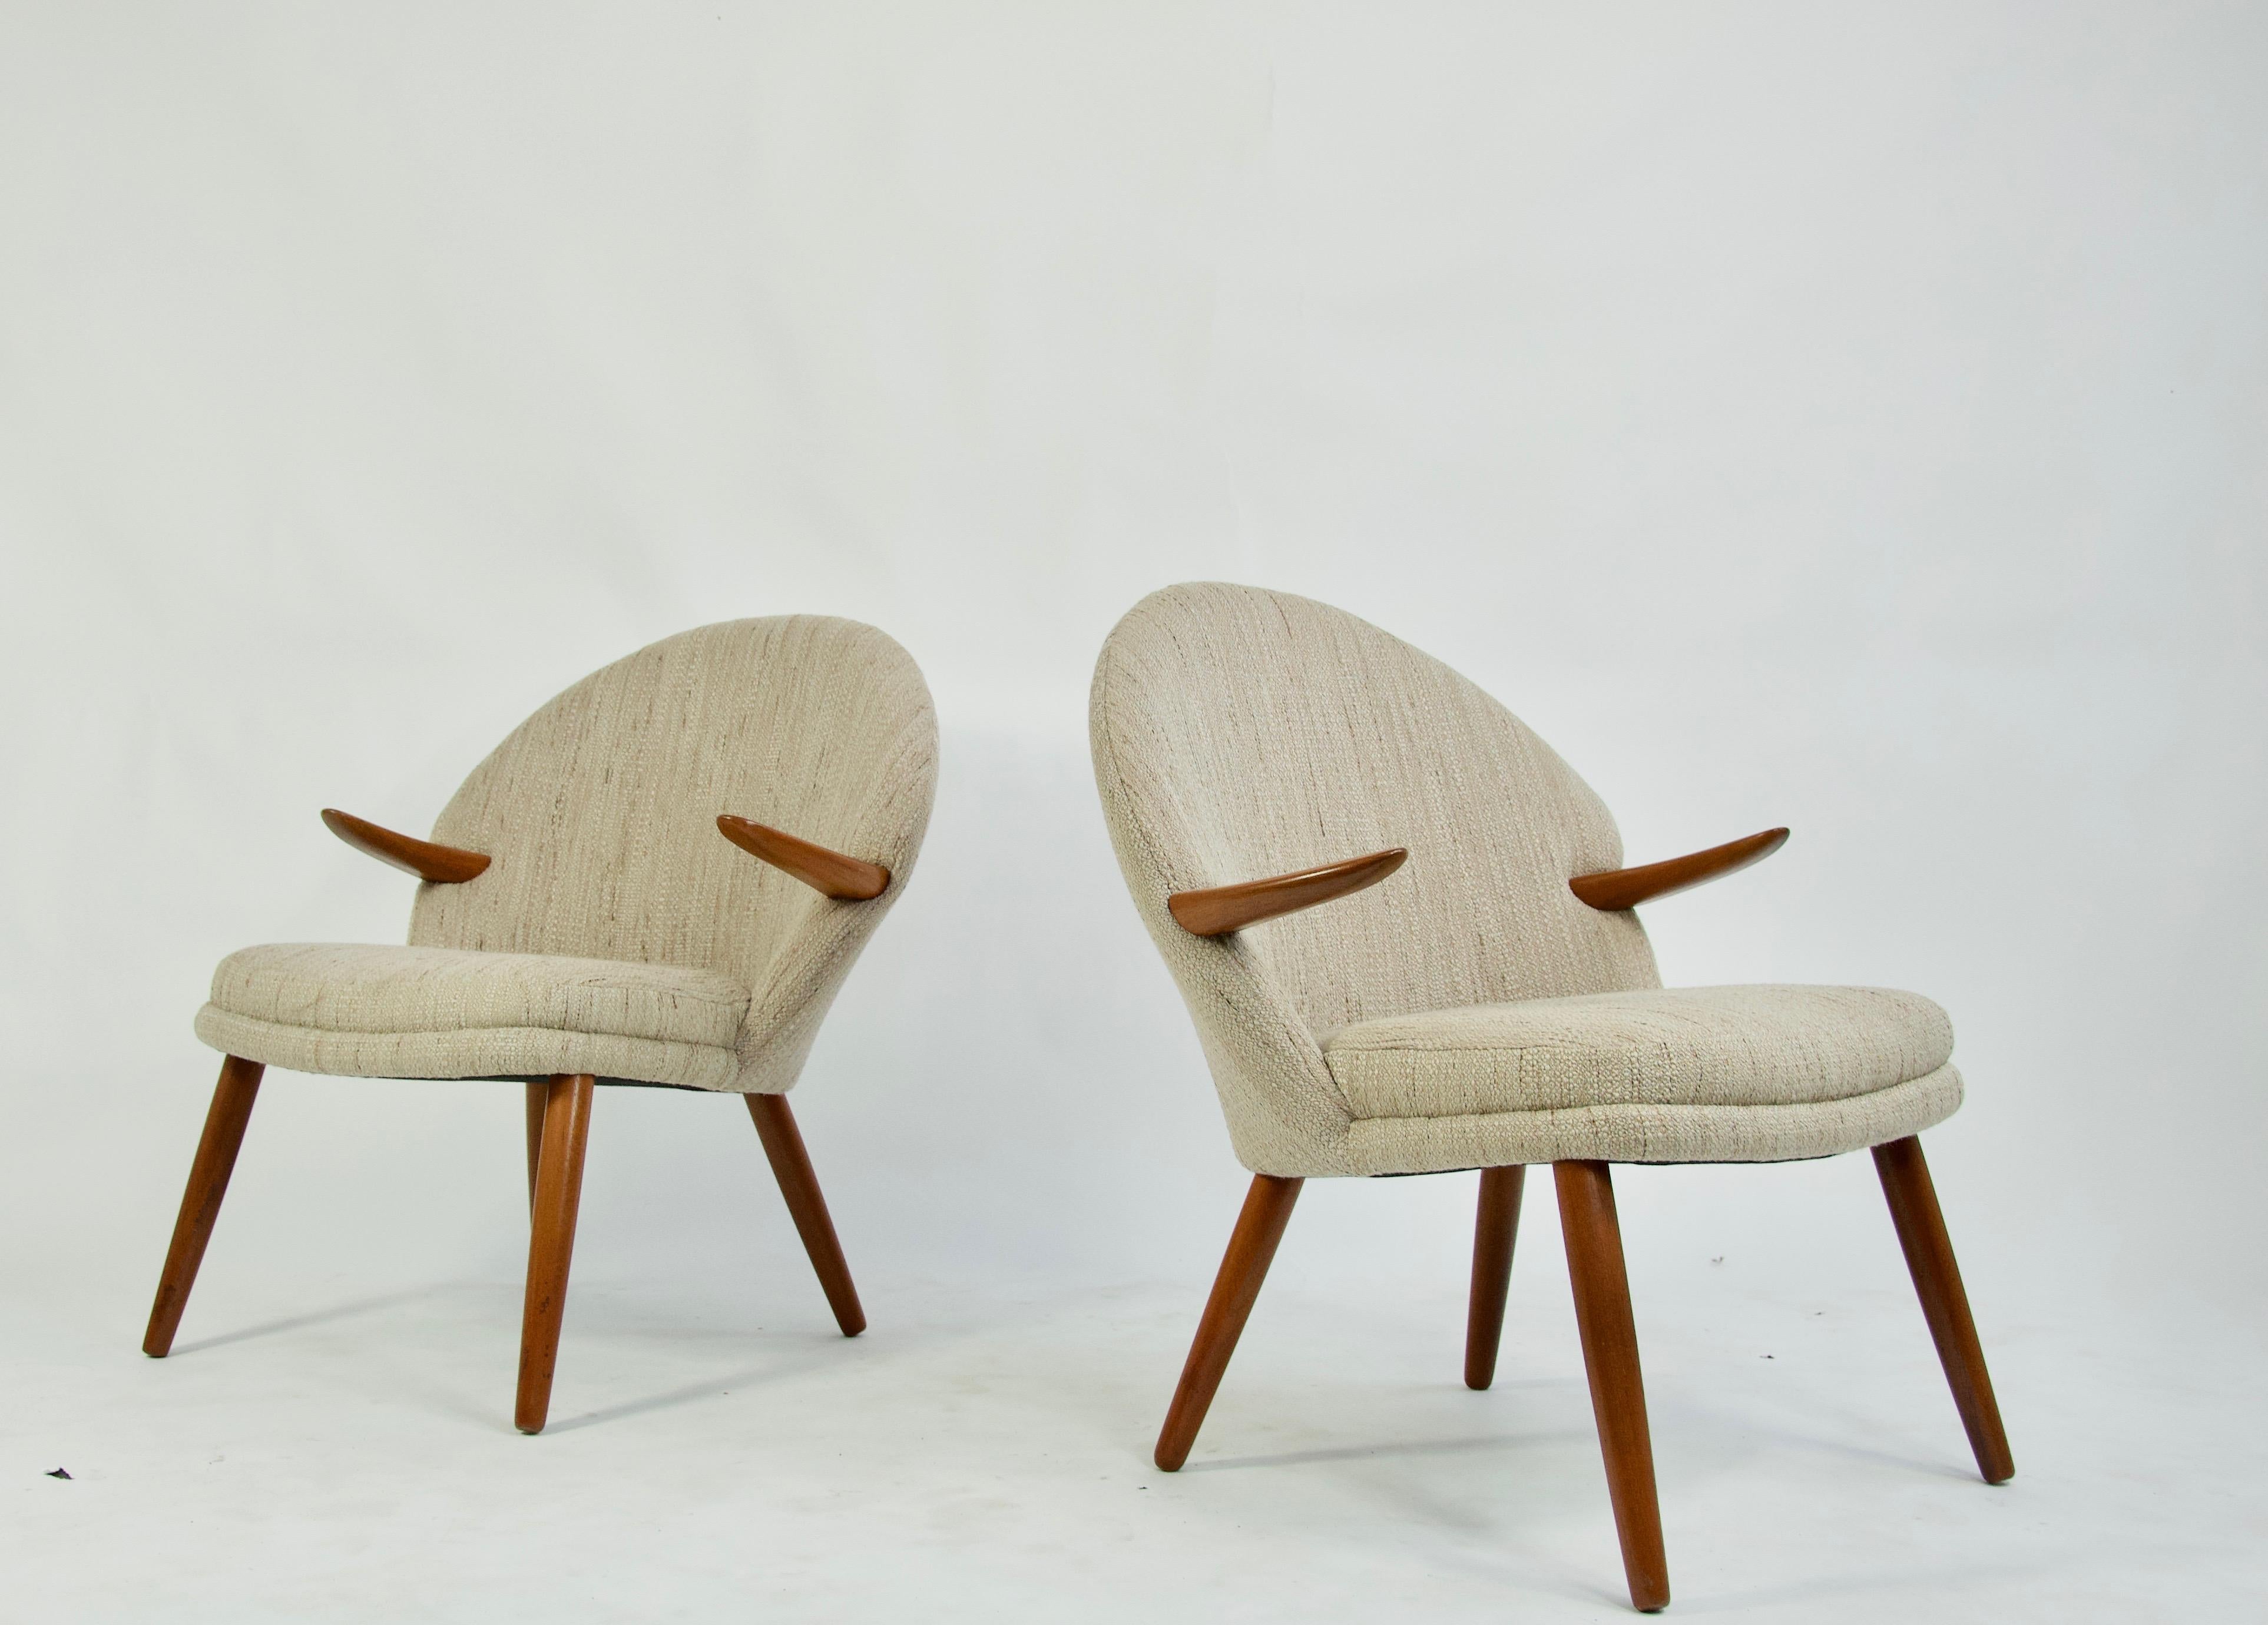 Pair of Kurt Olsen Danish teak lounge chairs for Glostrup Mobelfabrik.
Recently reupholstered with Knoll fabric.